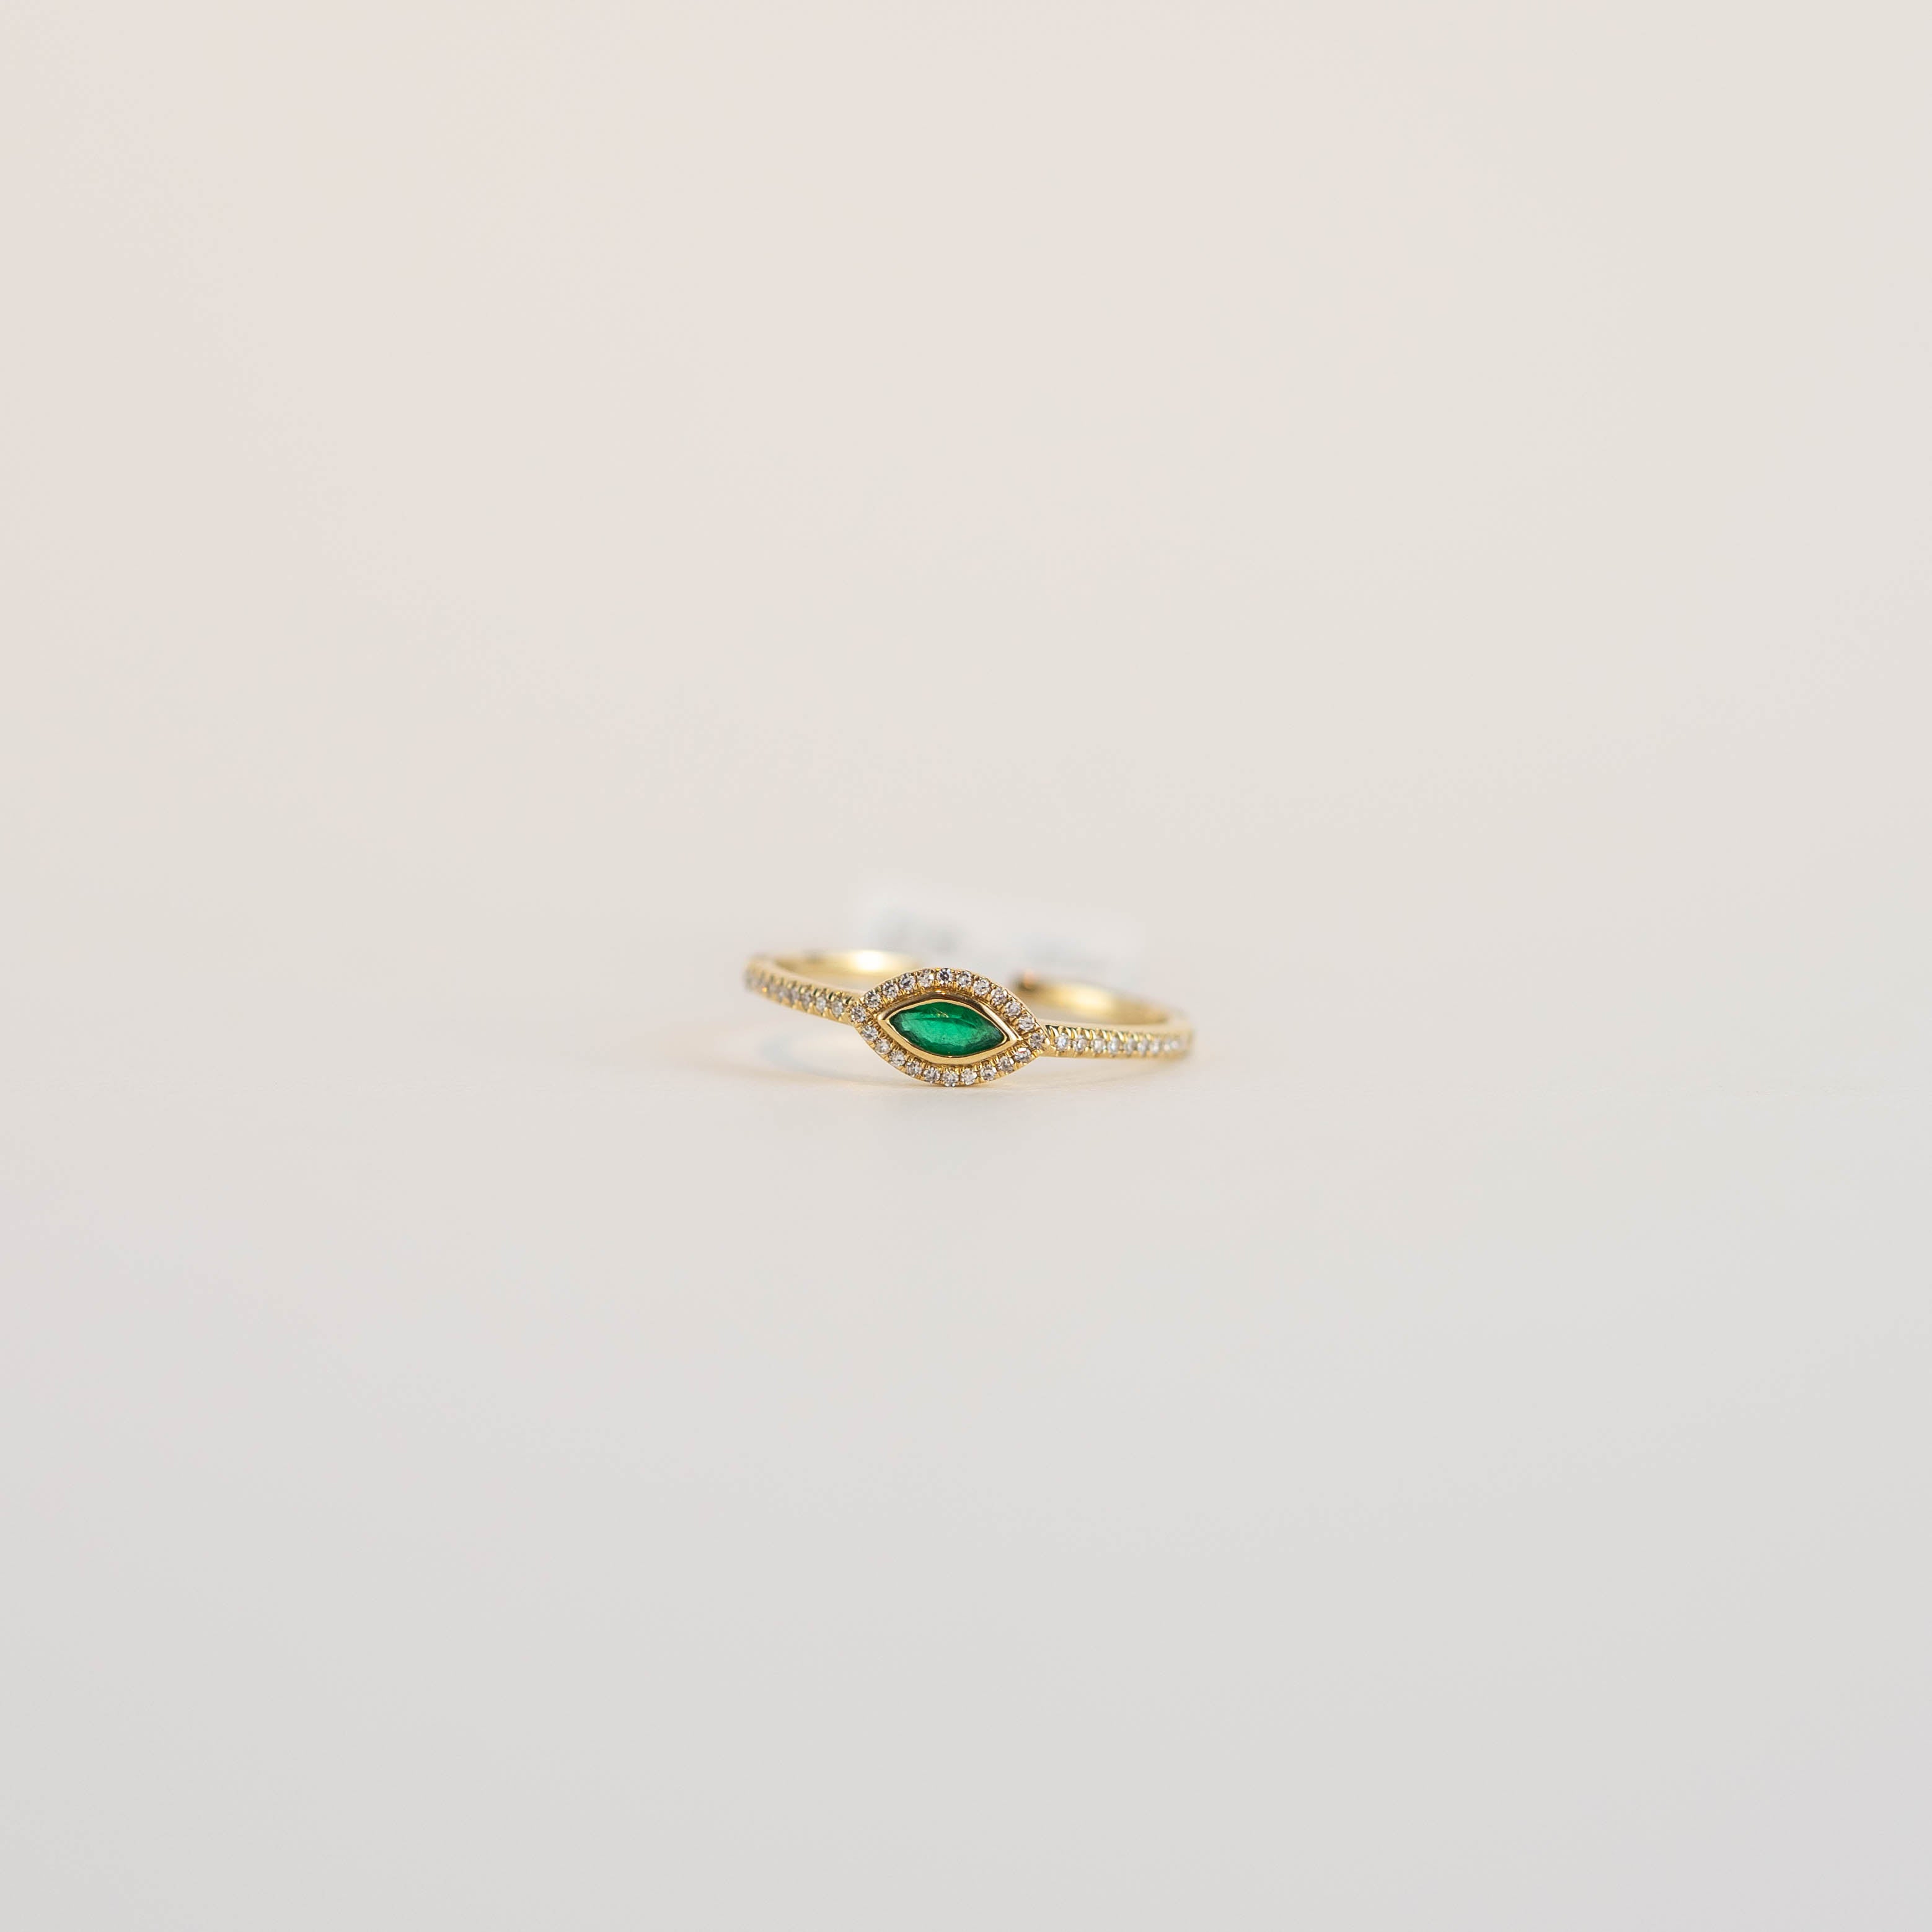 Rachel Marquise Bezel Emerald and Diamond Ring